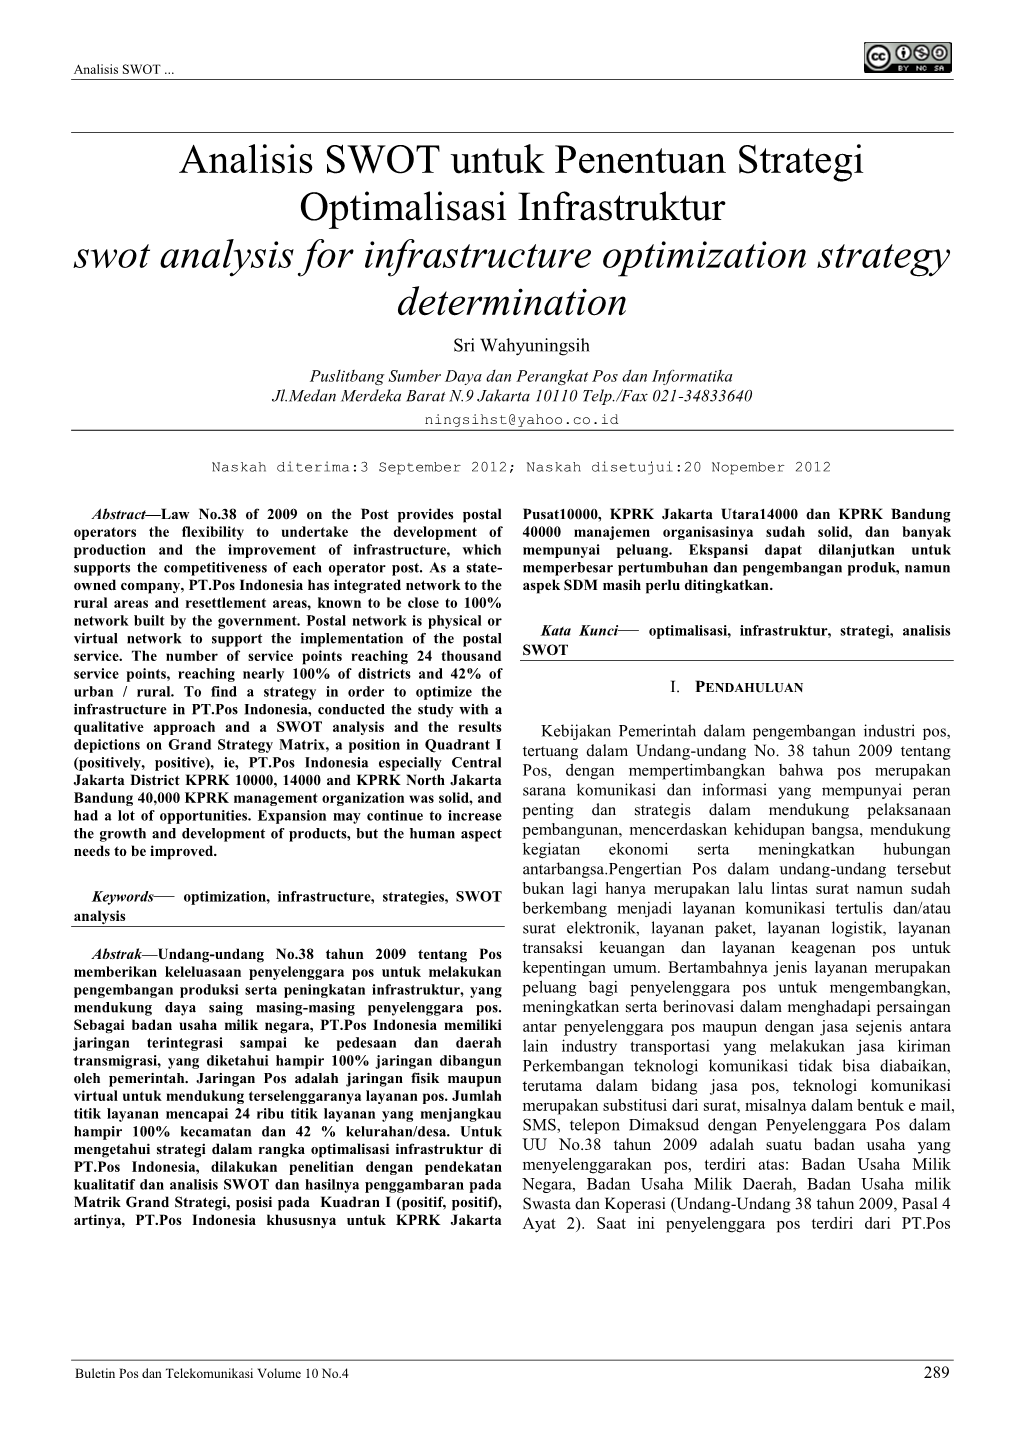 Analisis SWOT Untuk Penentuan Strategi Optimalisasi Infrastruktur Swot Analysis for Infrastructure Optimization Strategy Determination